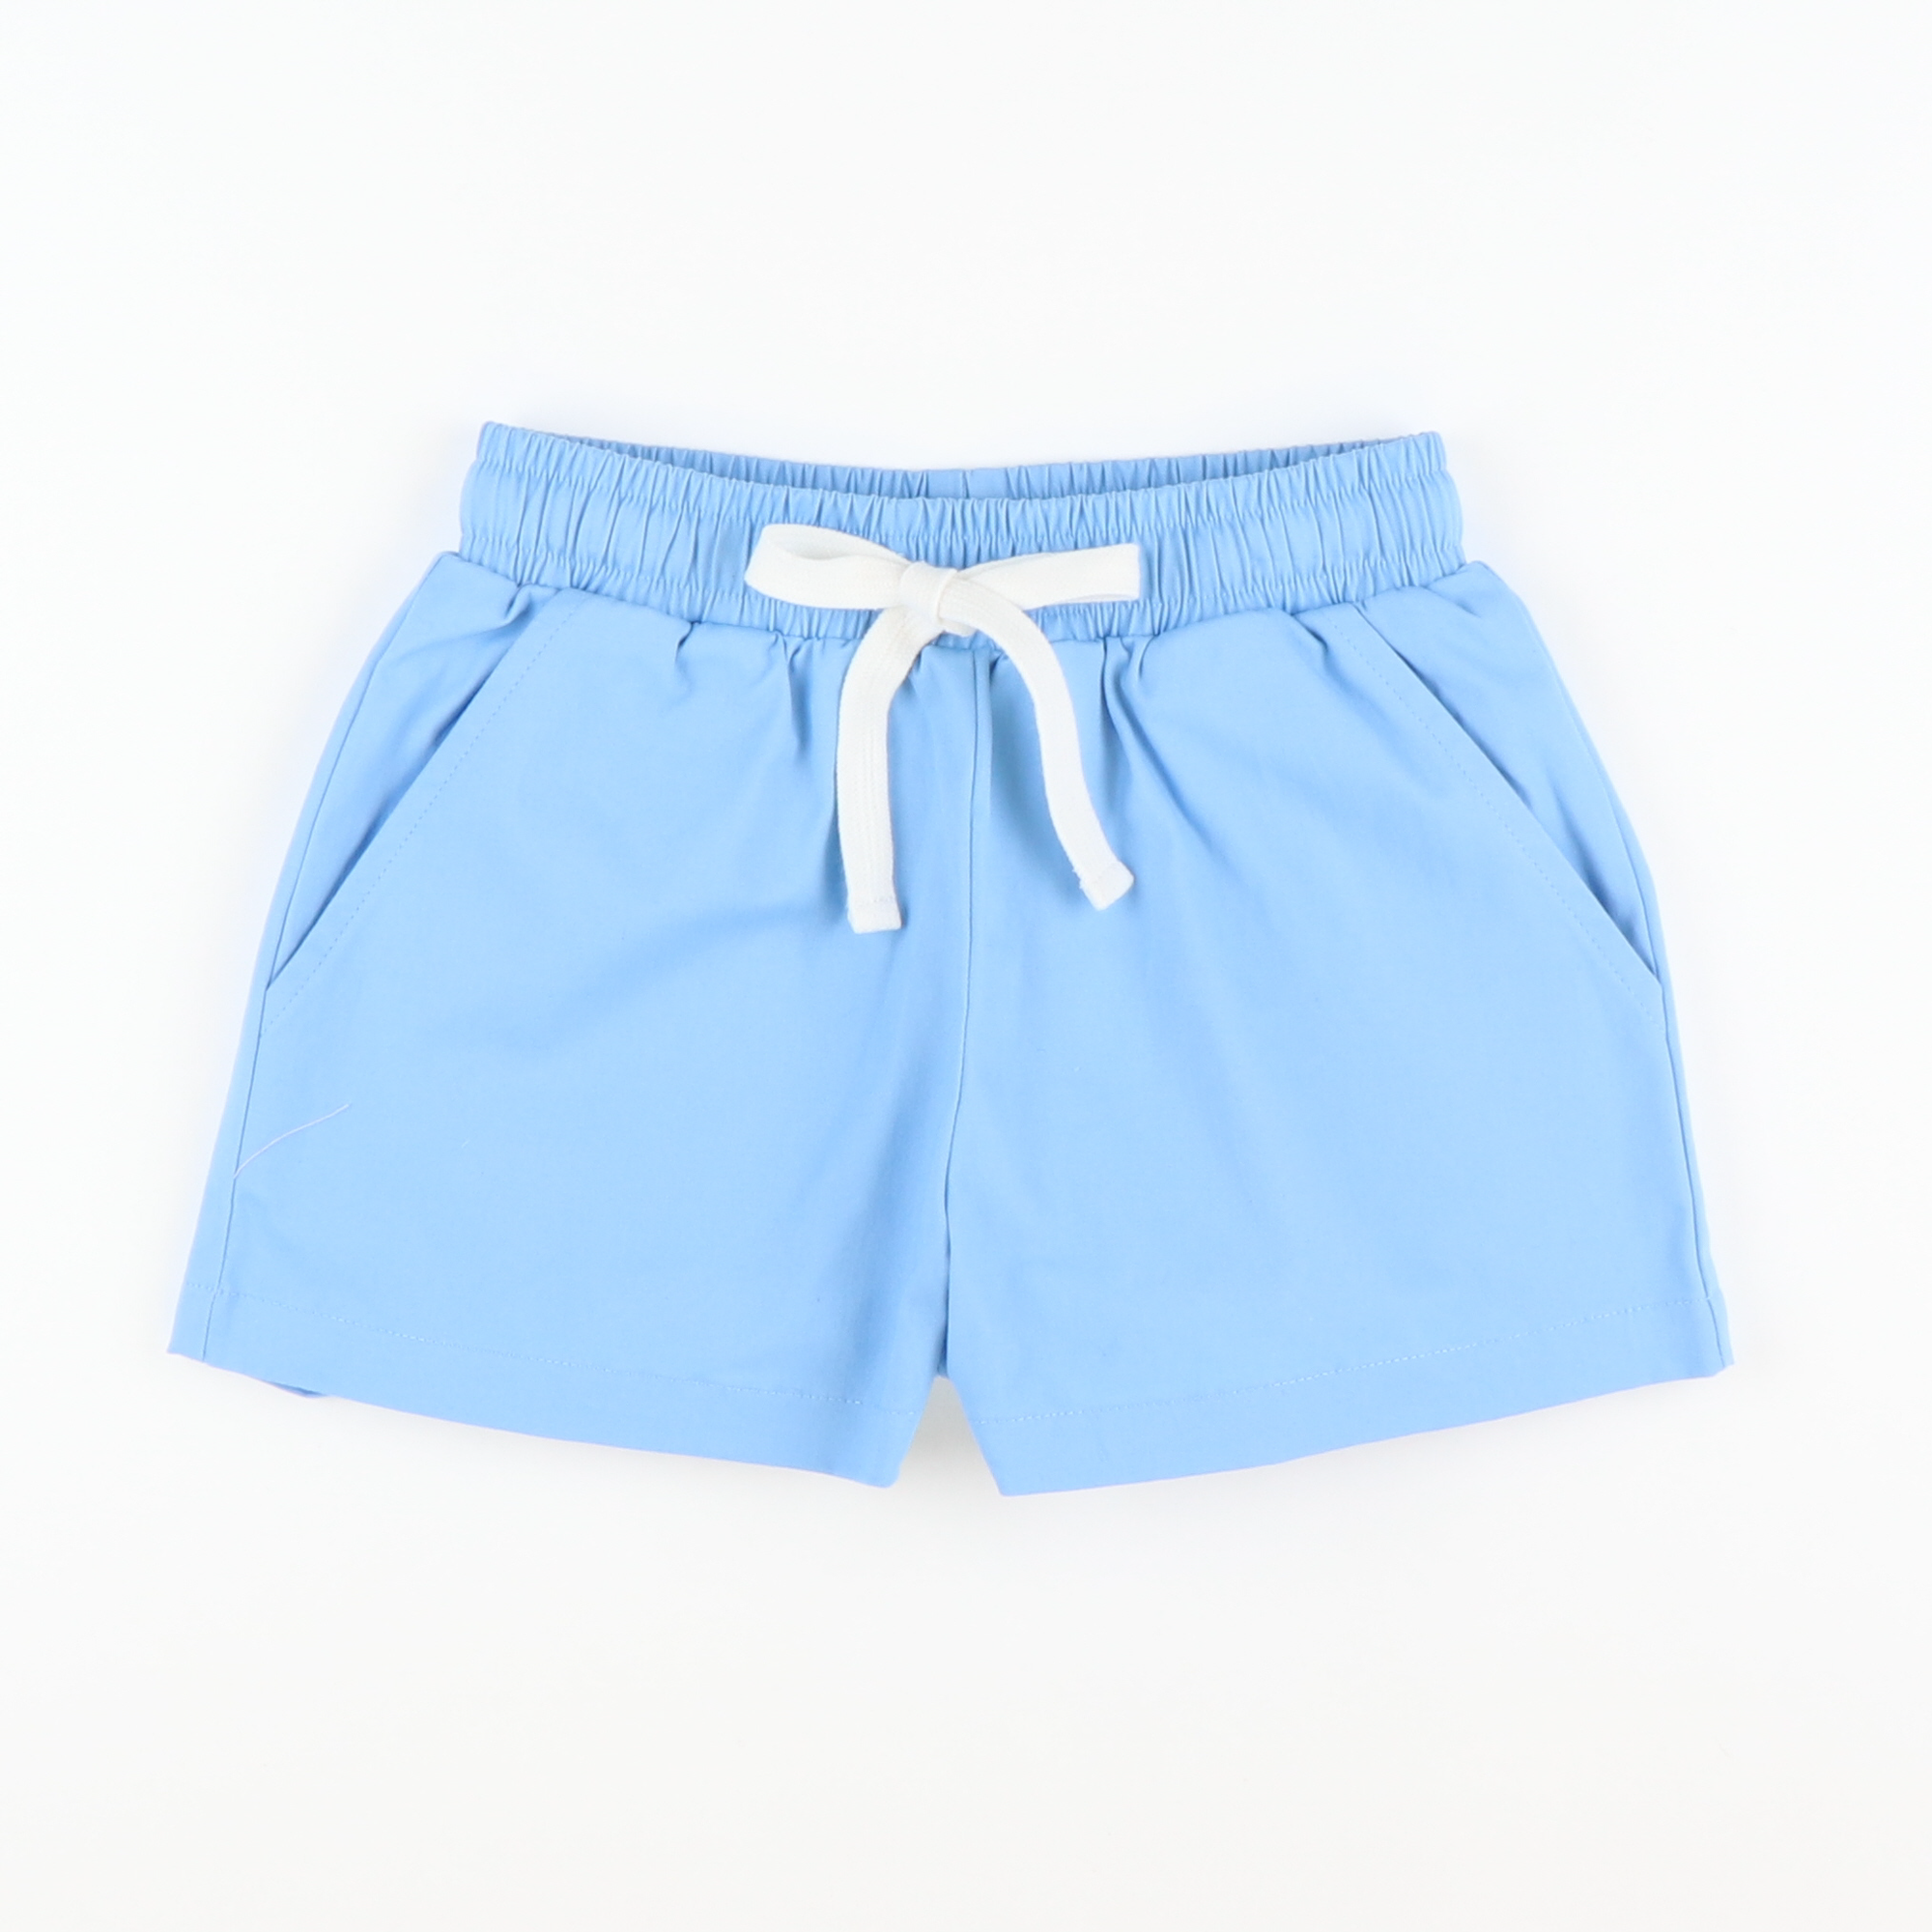 Boys Signature Twill Shorts - Caribbean Blue - Stellybelly